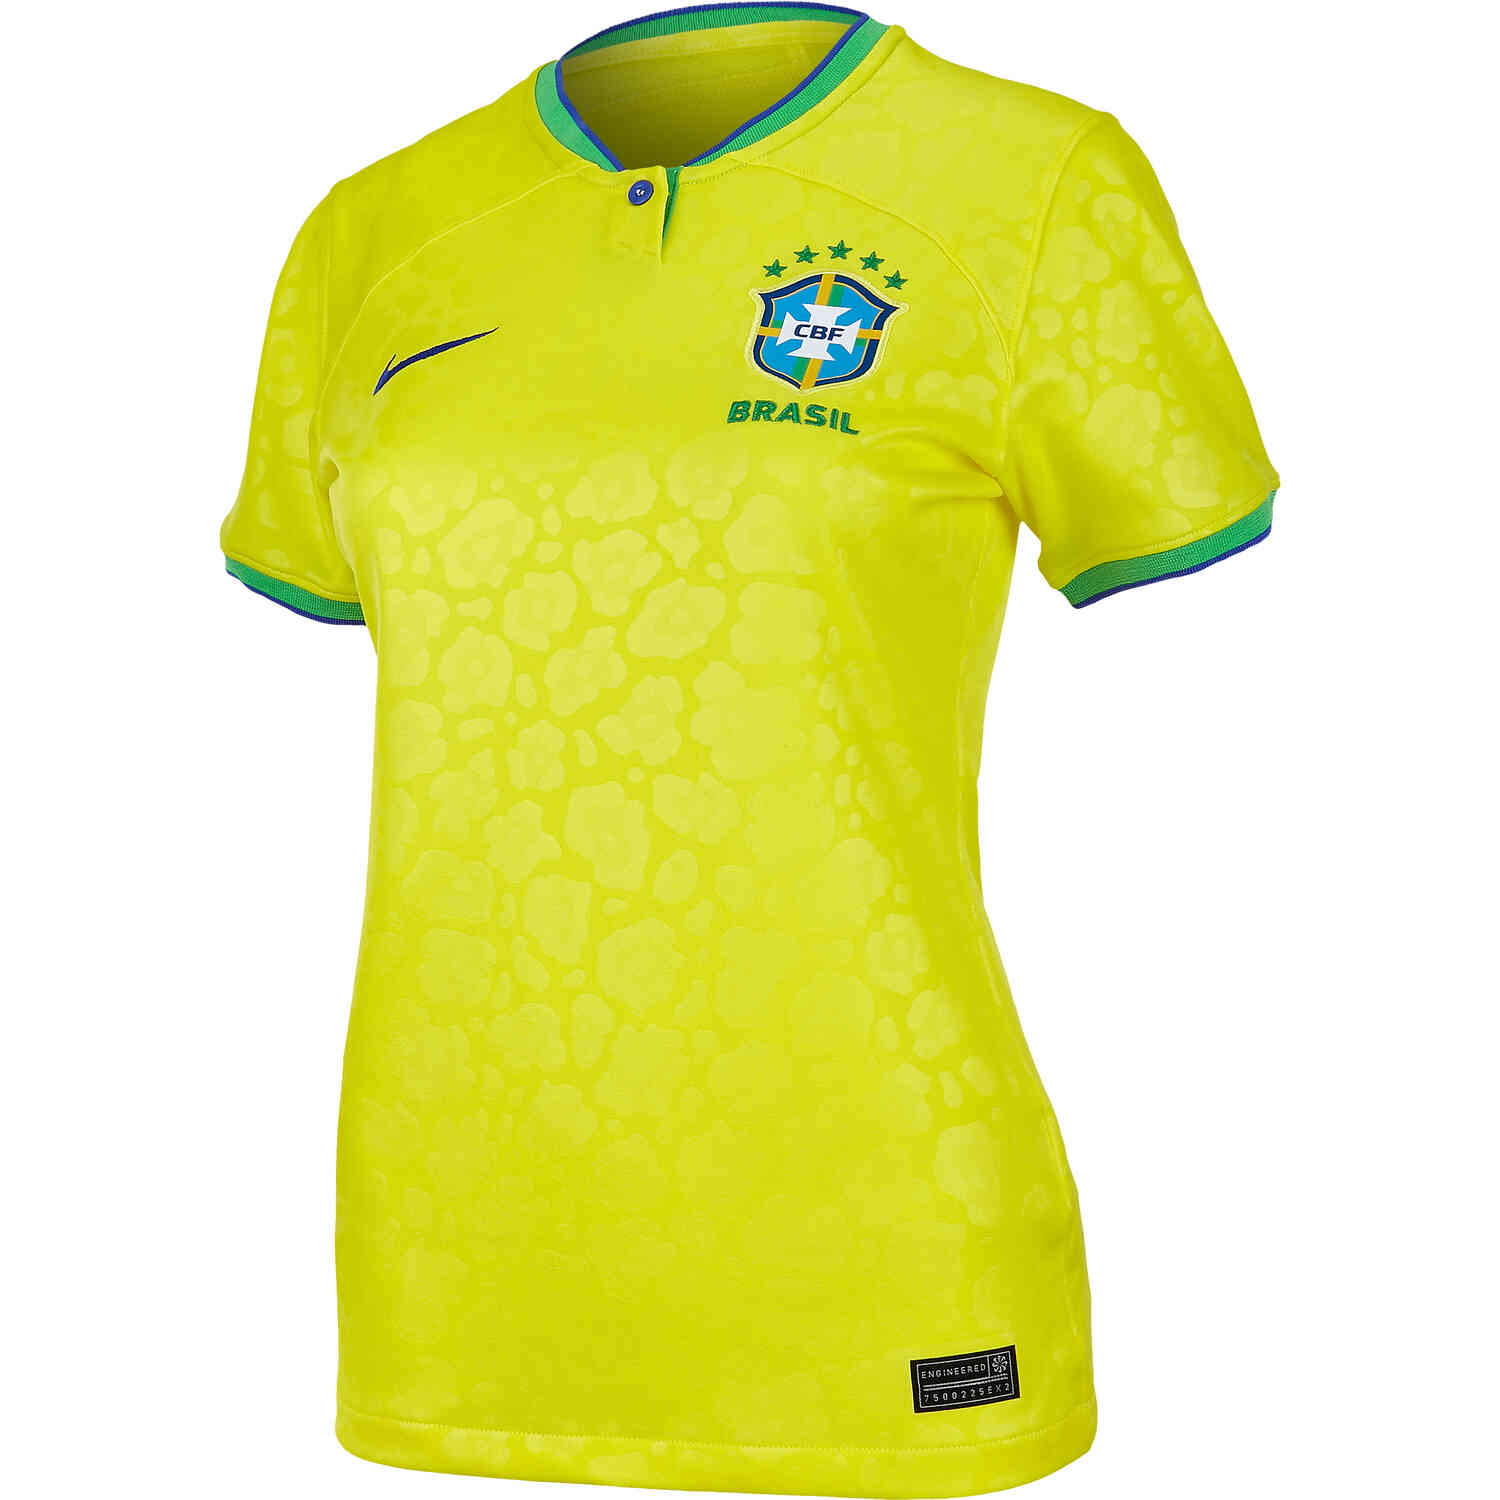 New Kids Brazil Neymar Home Premium Soccer Uniform 2022,brasil